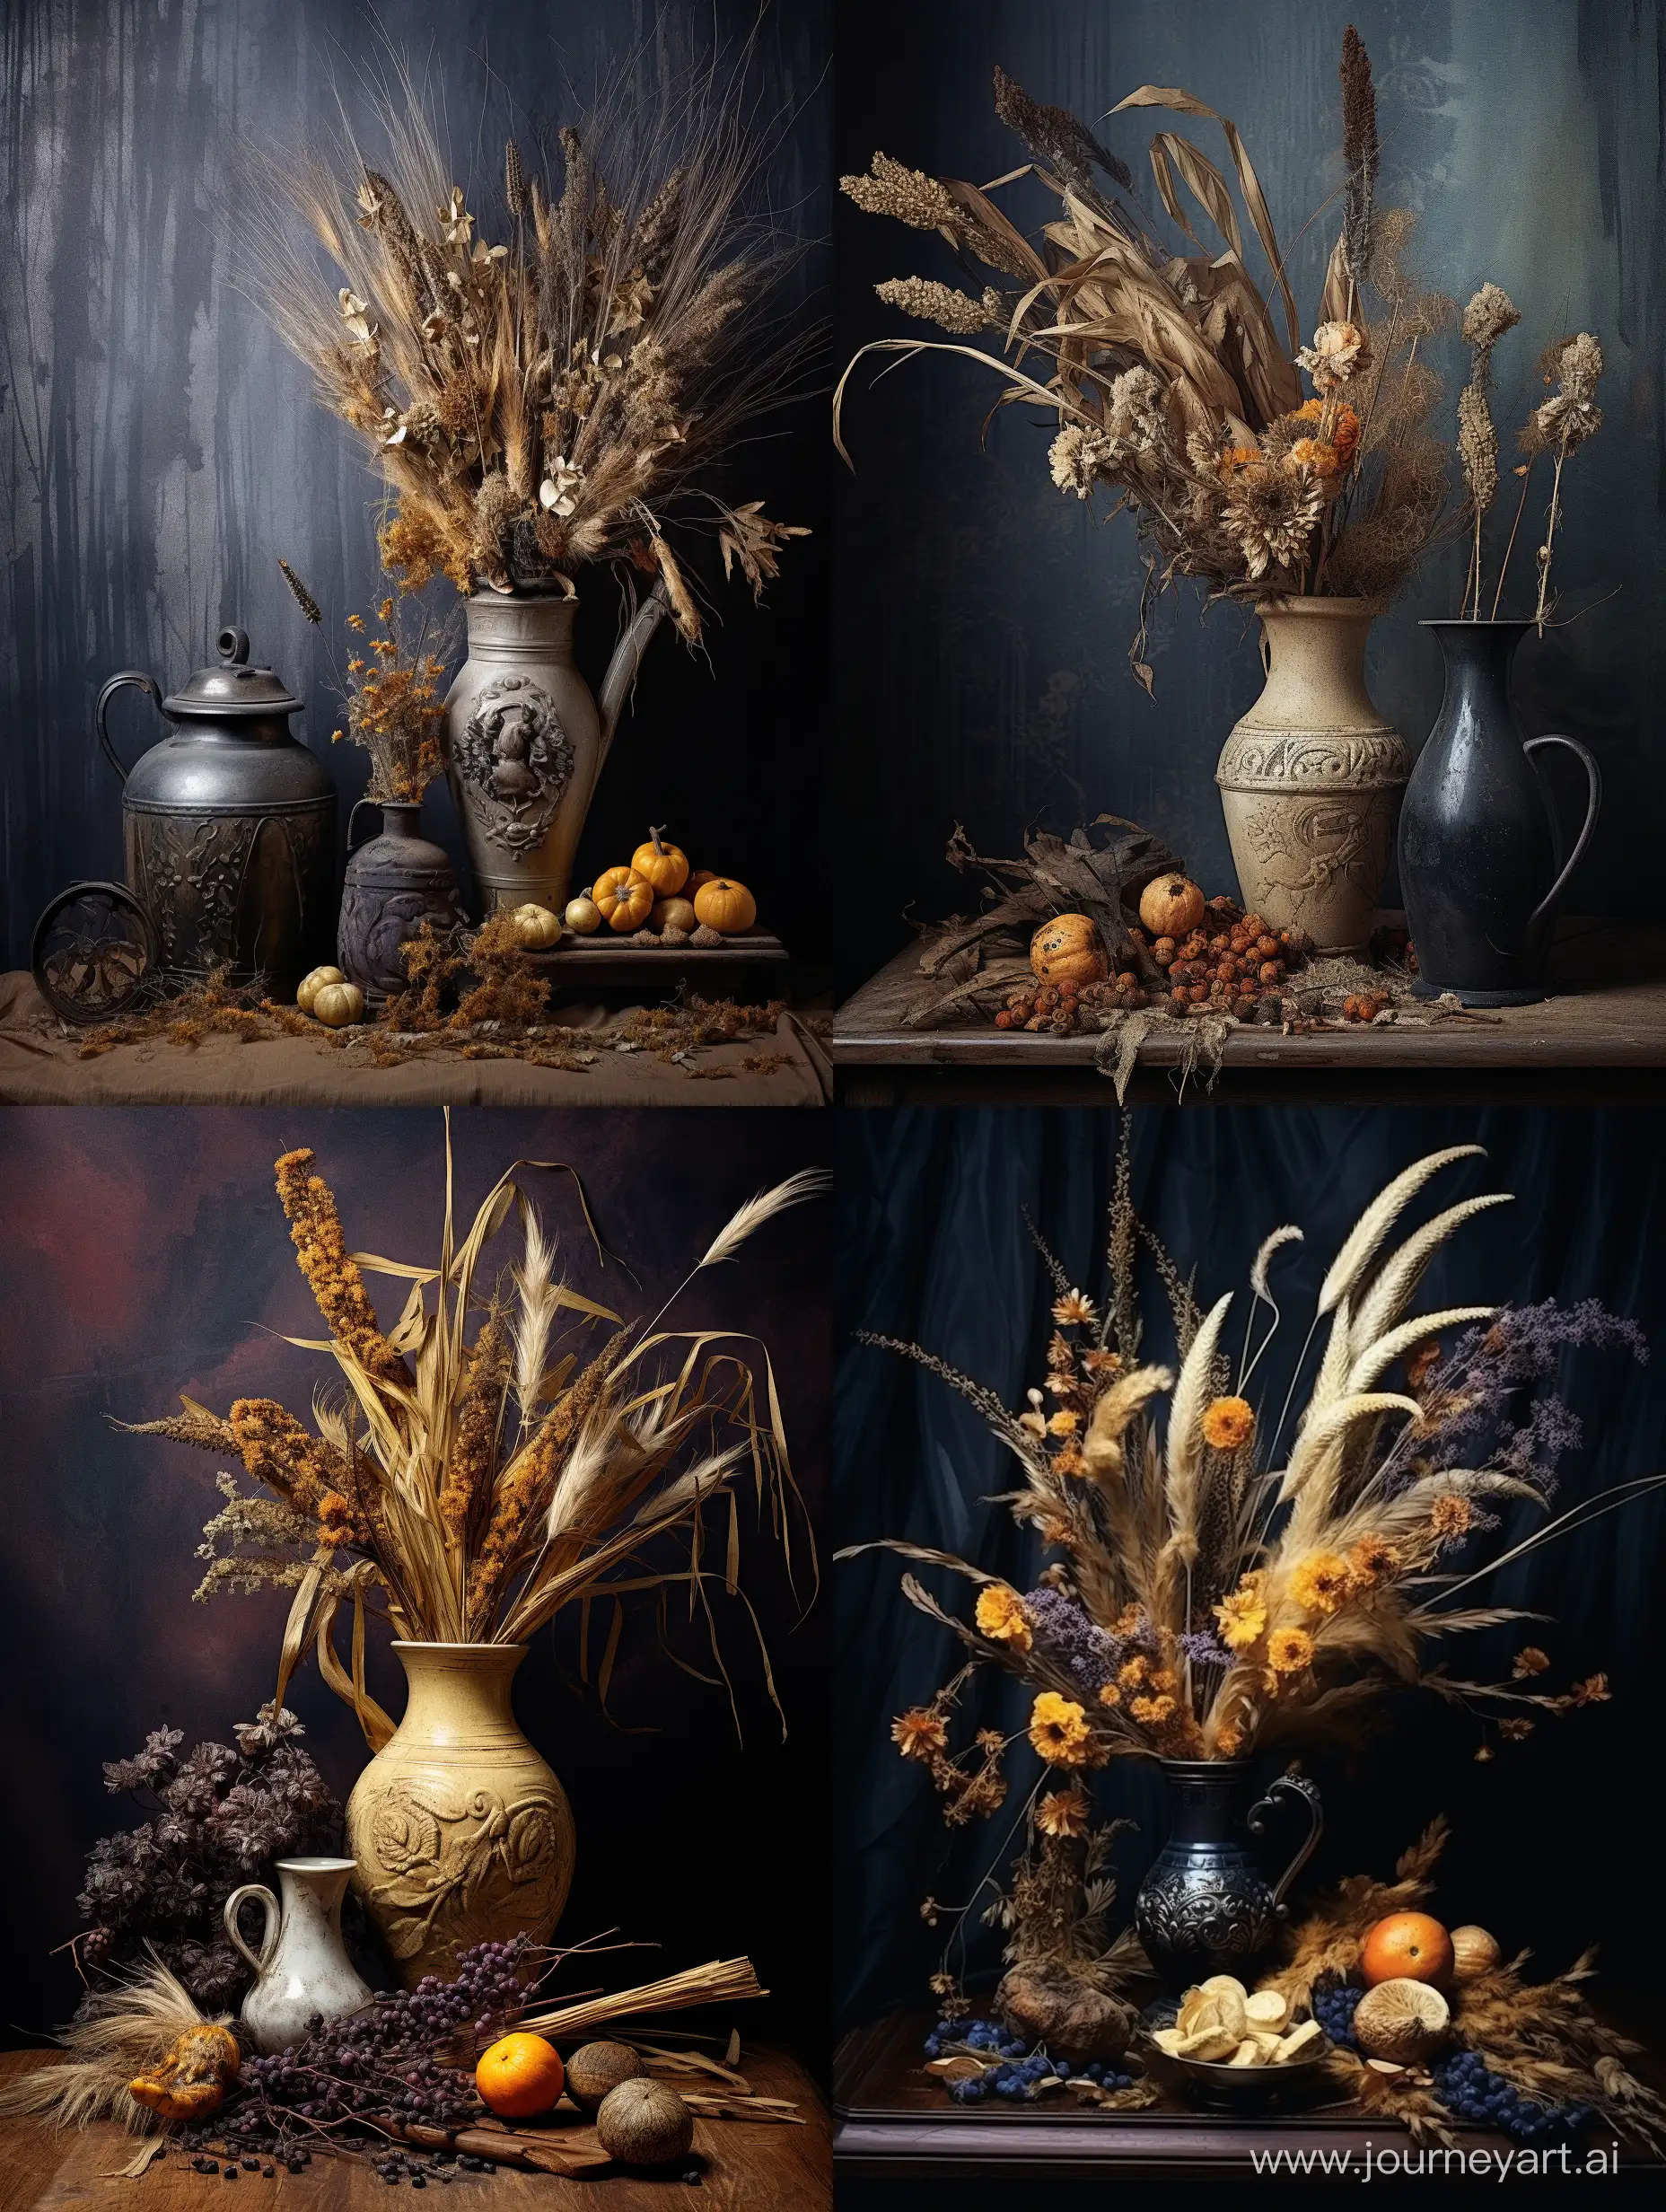 Elegant-Still-Life-with-Dried-Flowers-Interior-Decor-in-Subtle-Shadows